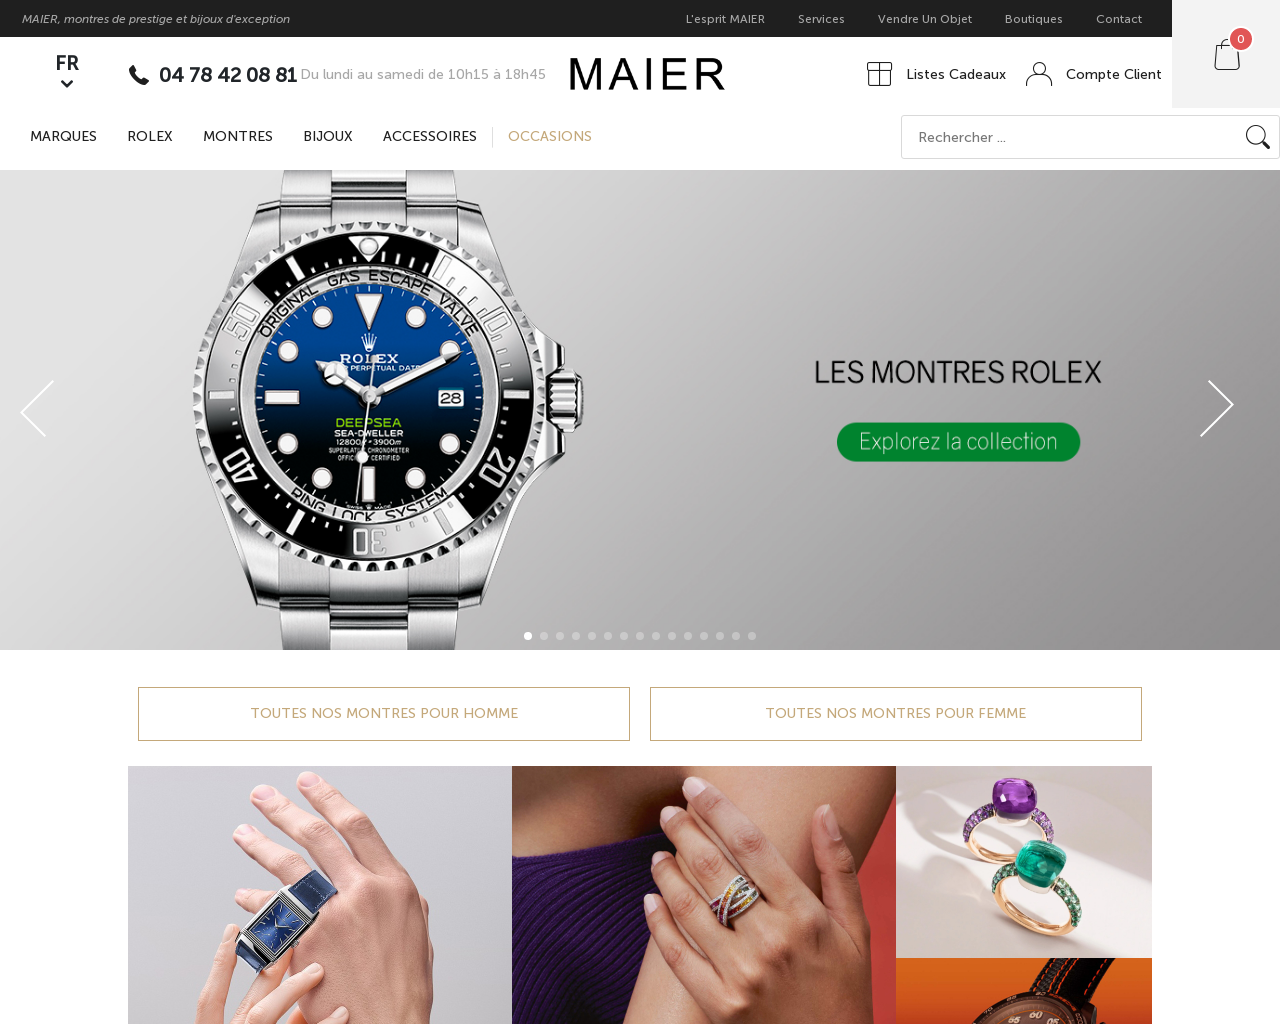 www.maier.fr